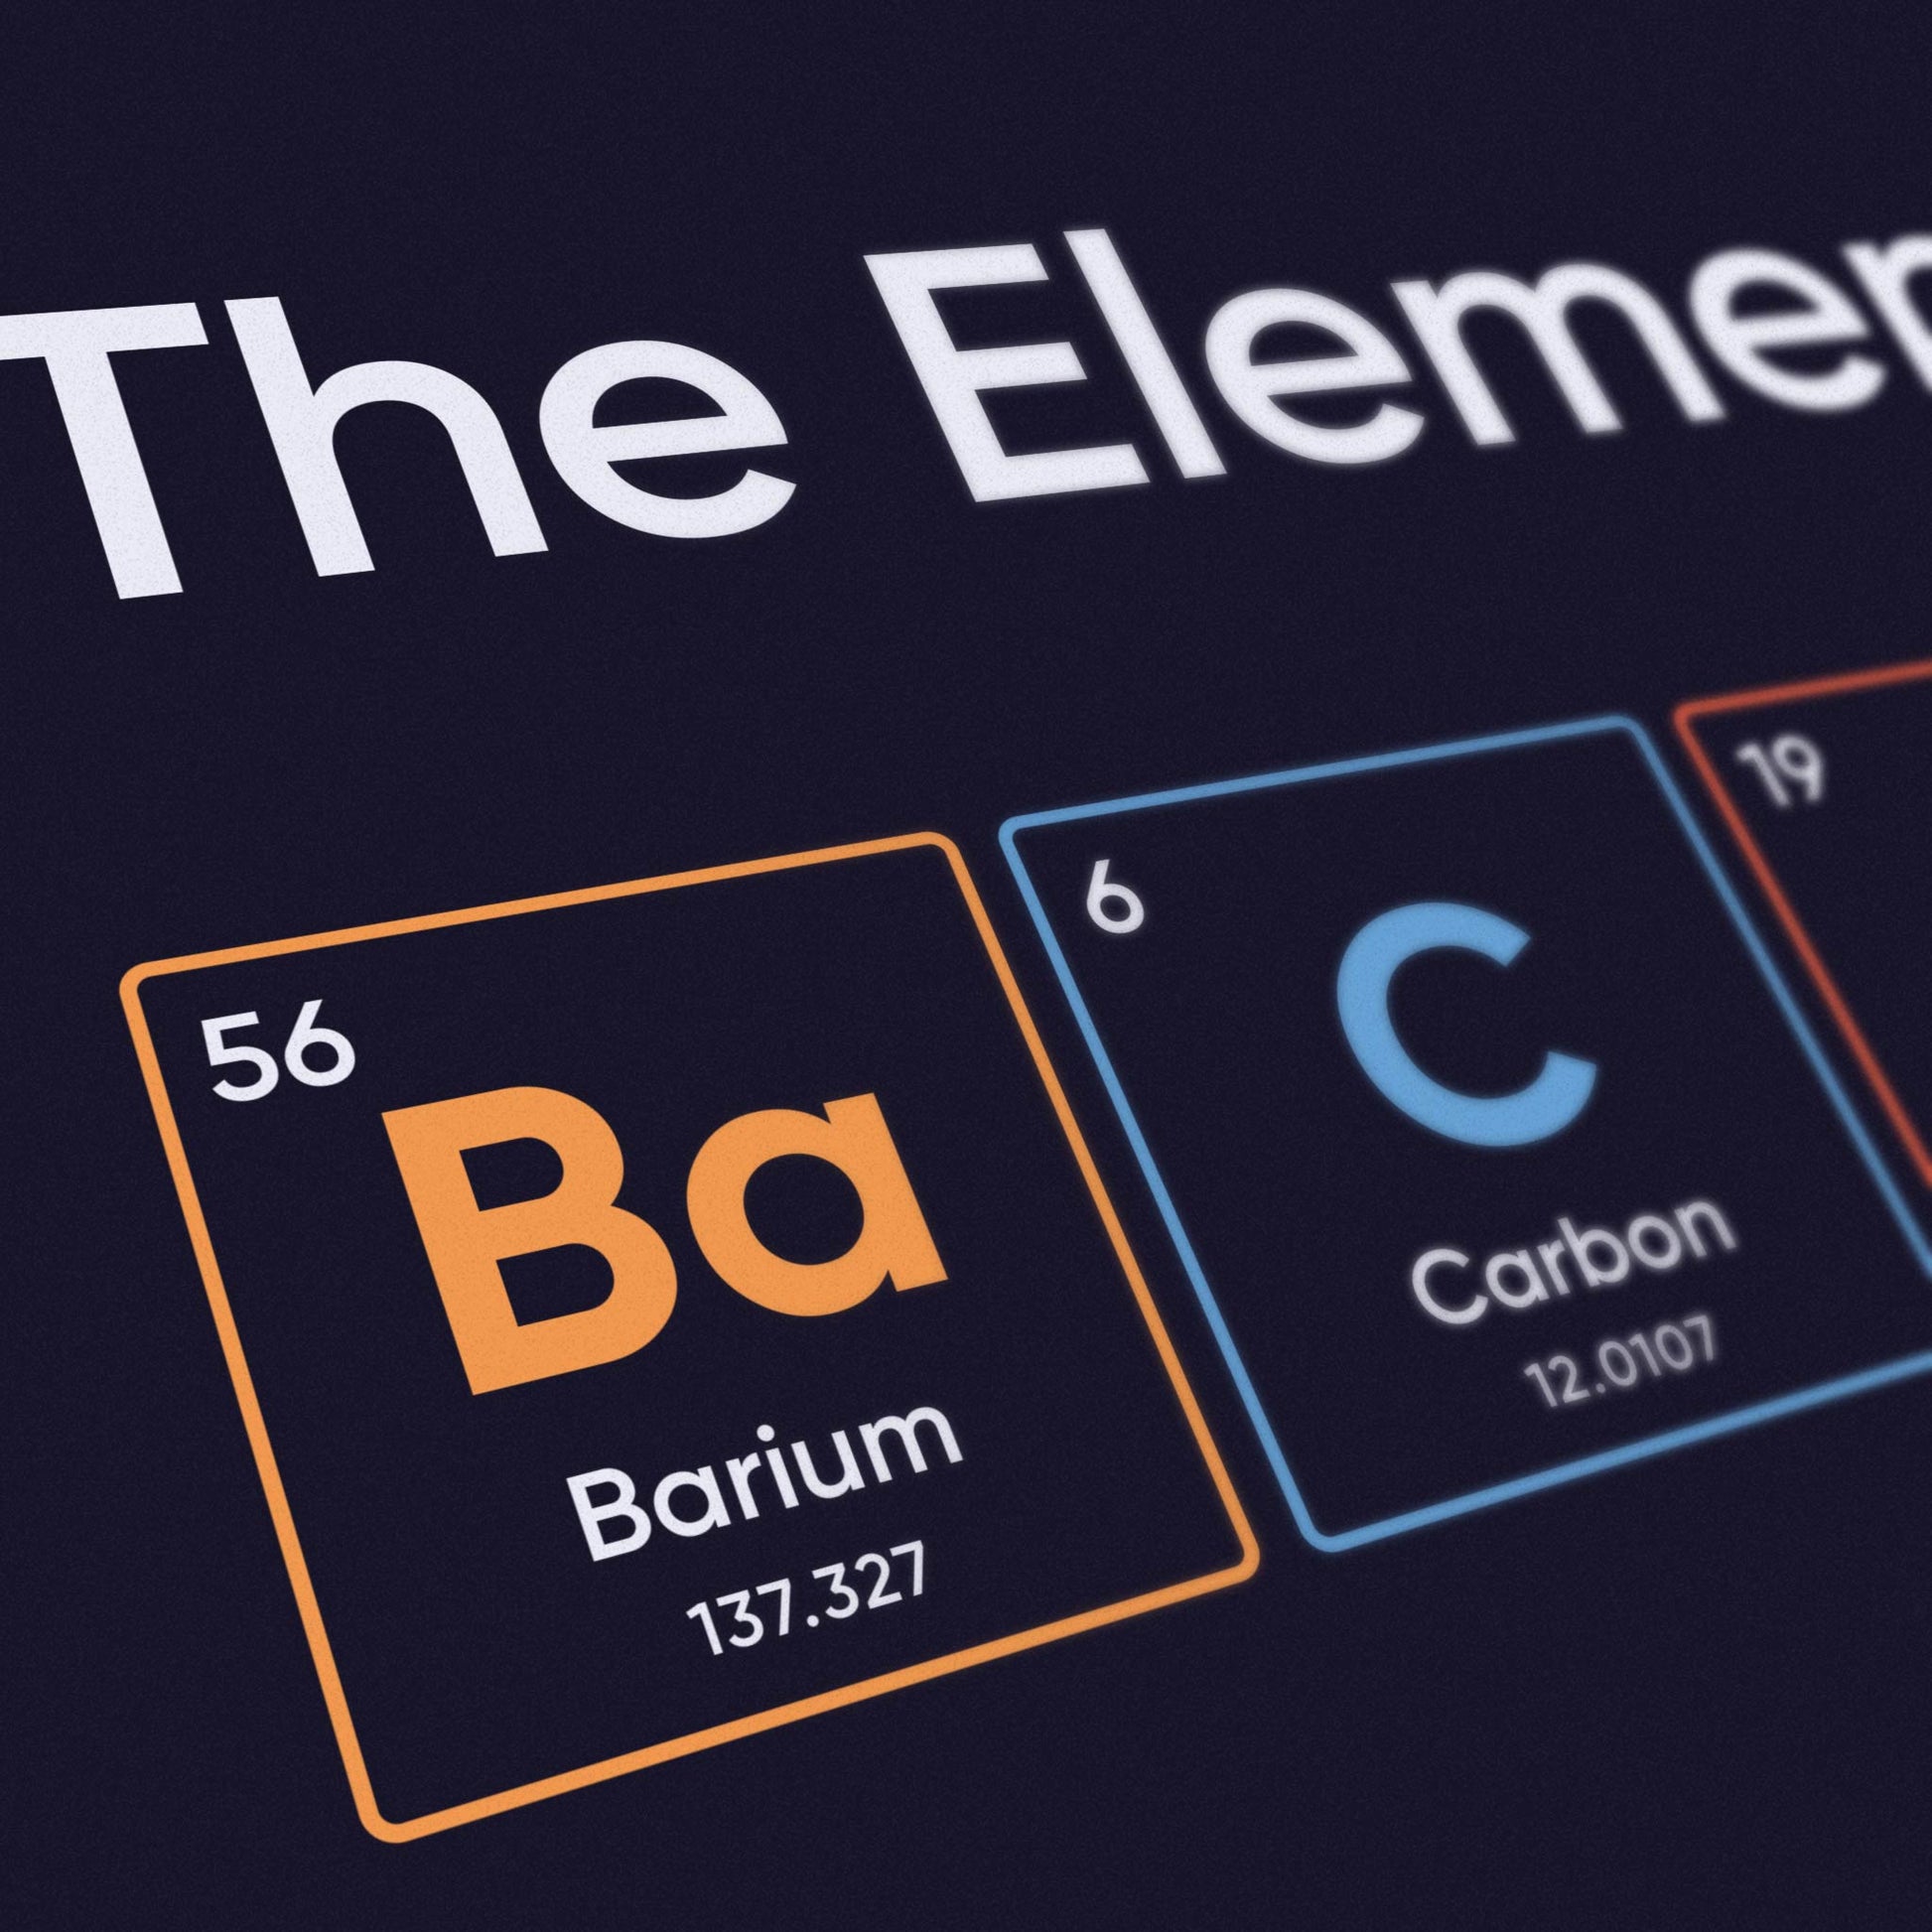 "The Elements" Backgammon Poster - Backgammon Galaxy Poster